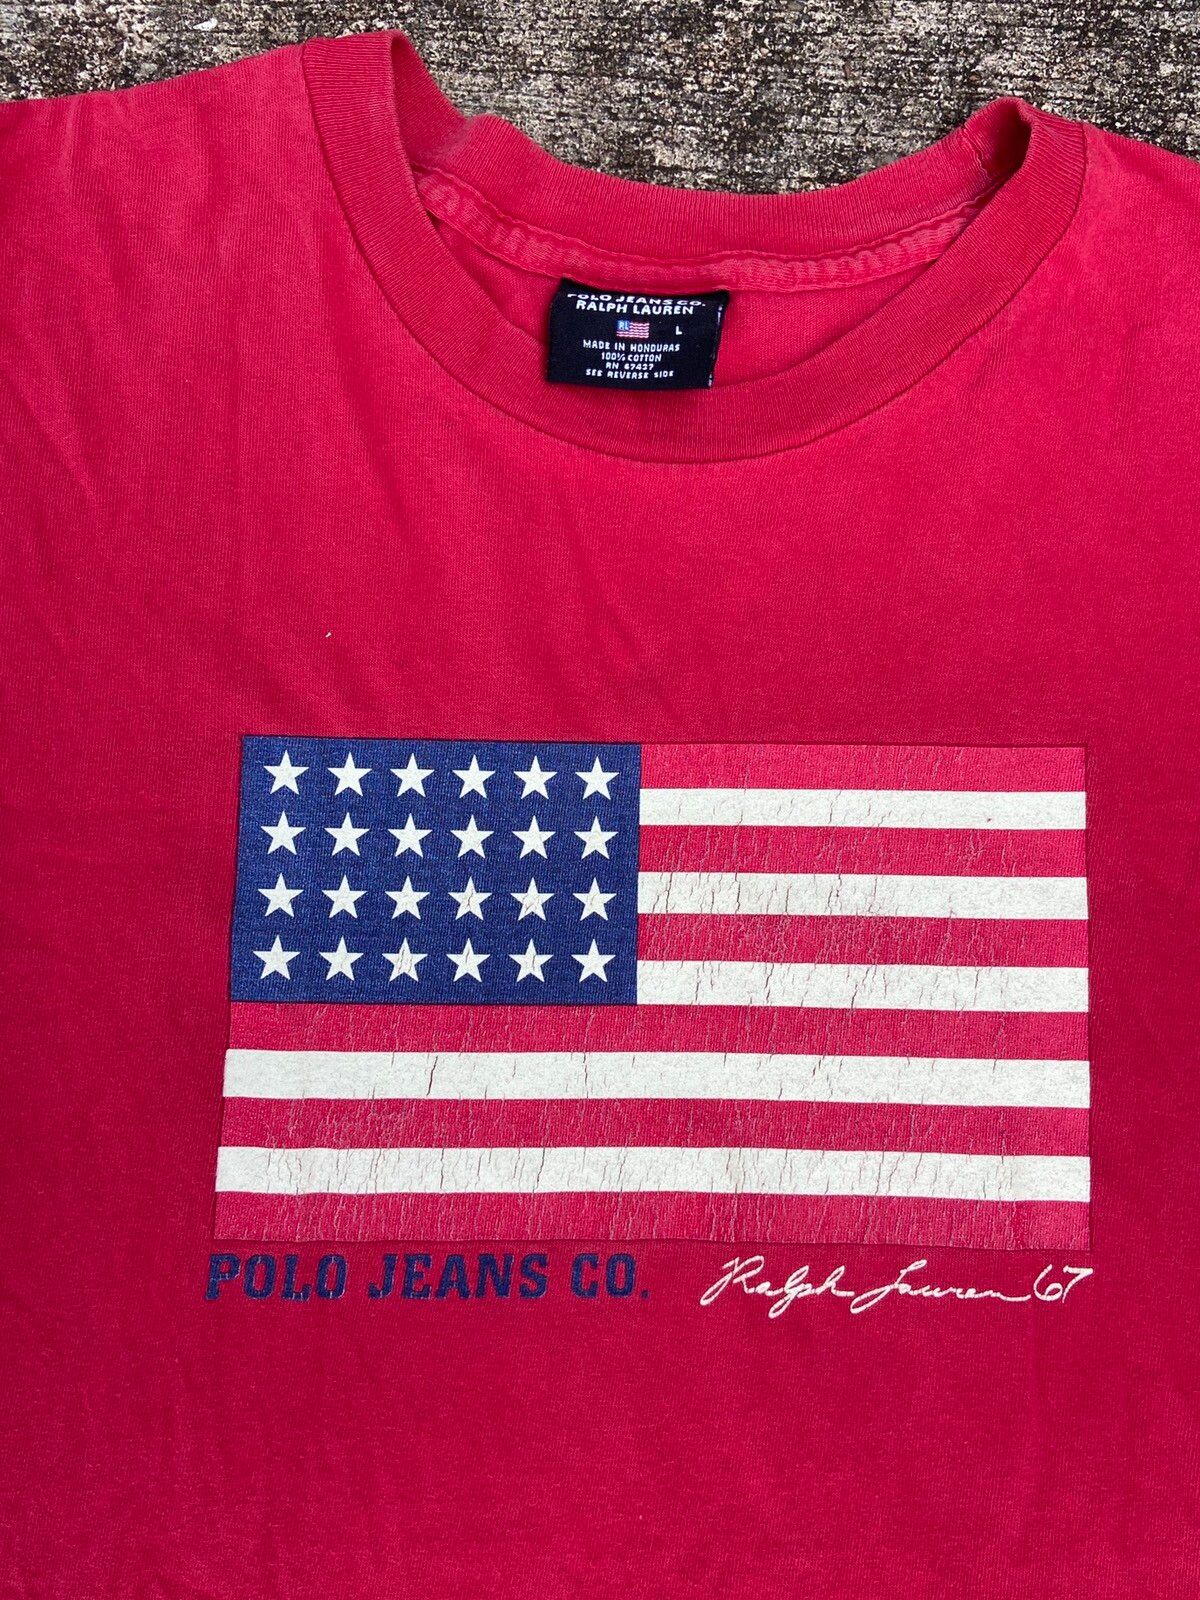 Polo Ralph Lauren Polo USA Country Flag Shirt Size US L / EU 52-54 / 3 - 1 Preview